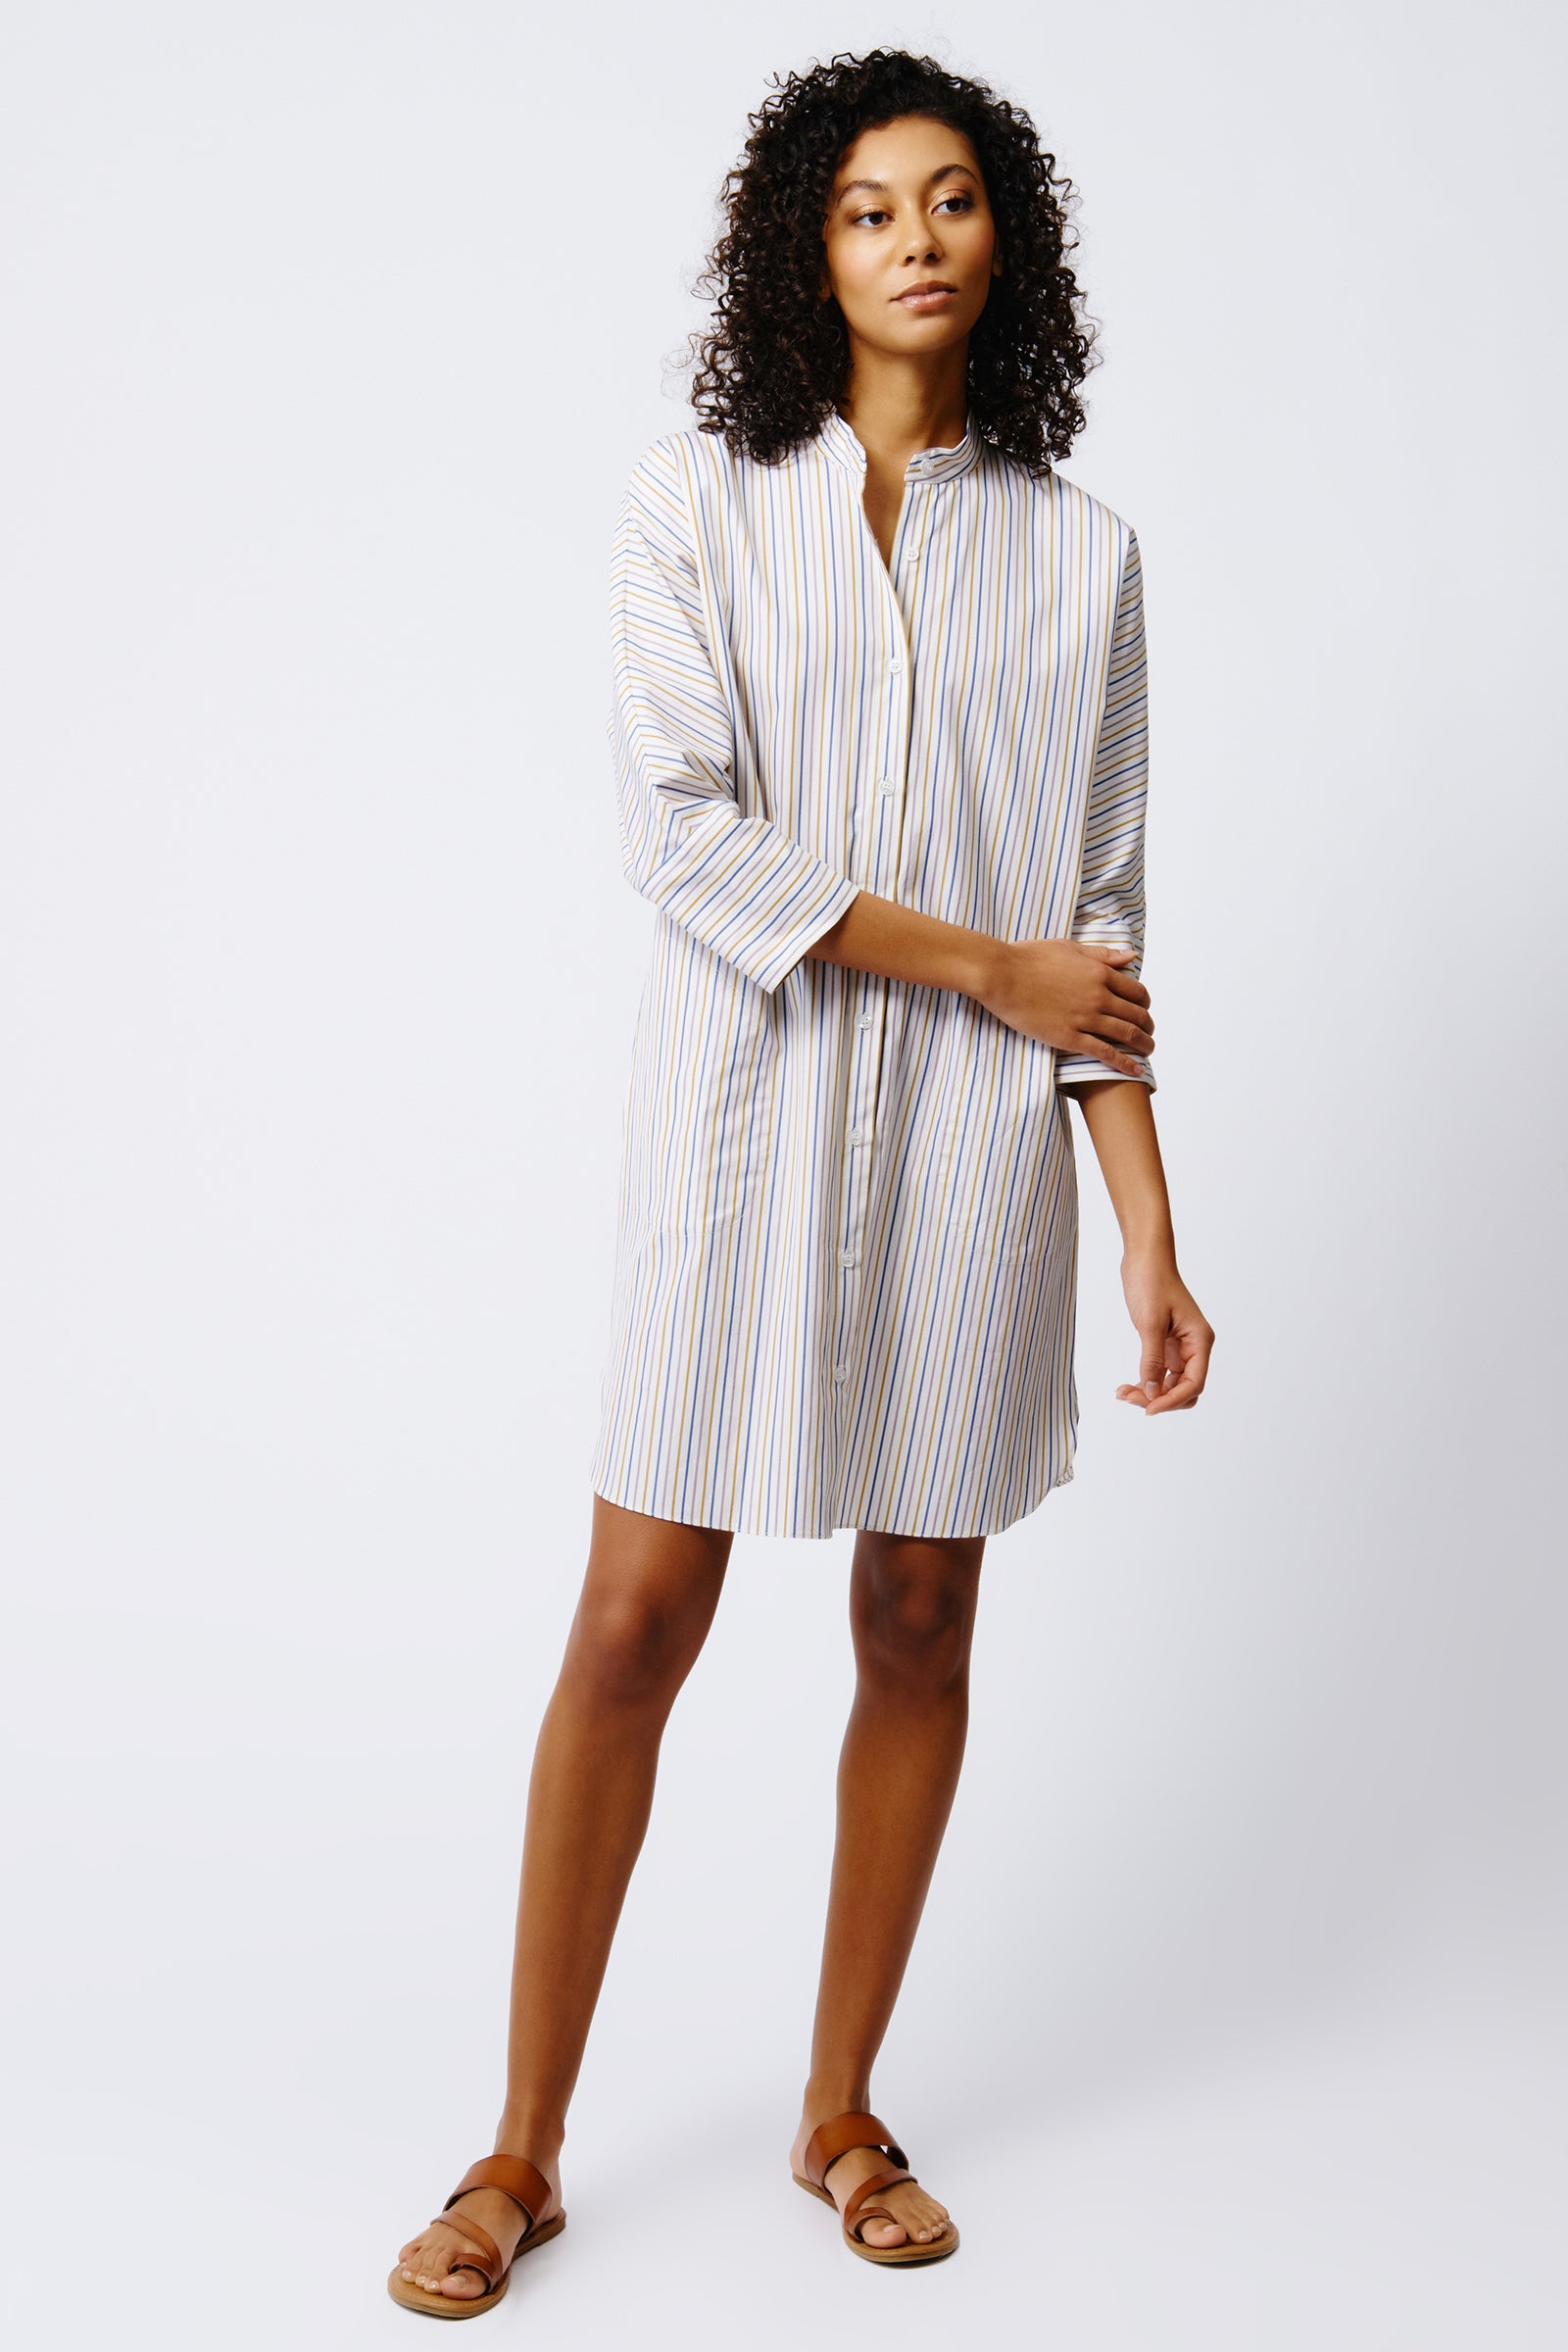 Kal Rieman June Shirt Dress in Multi Stripe on Model Full Front View 2